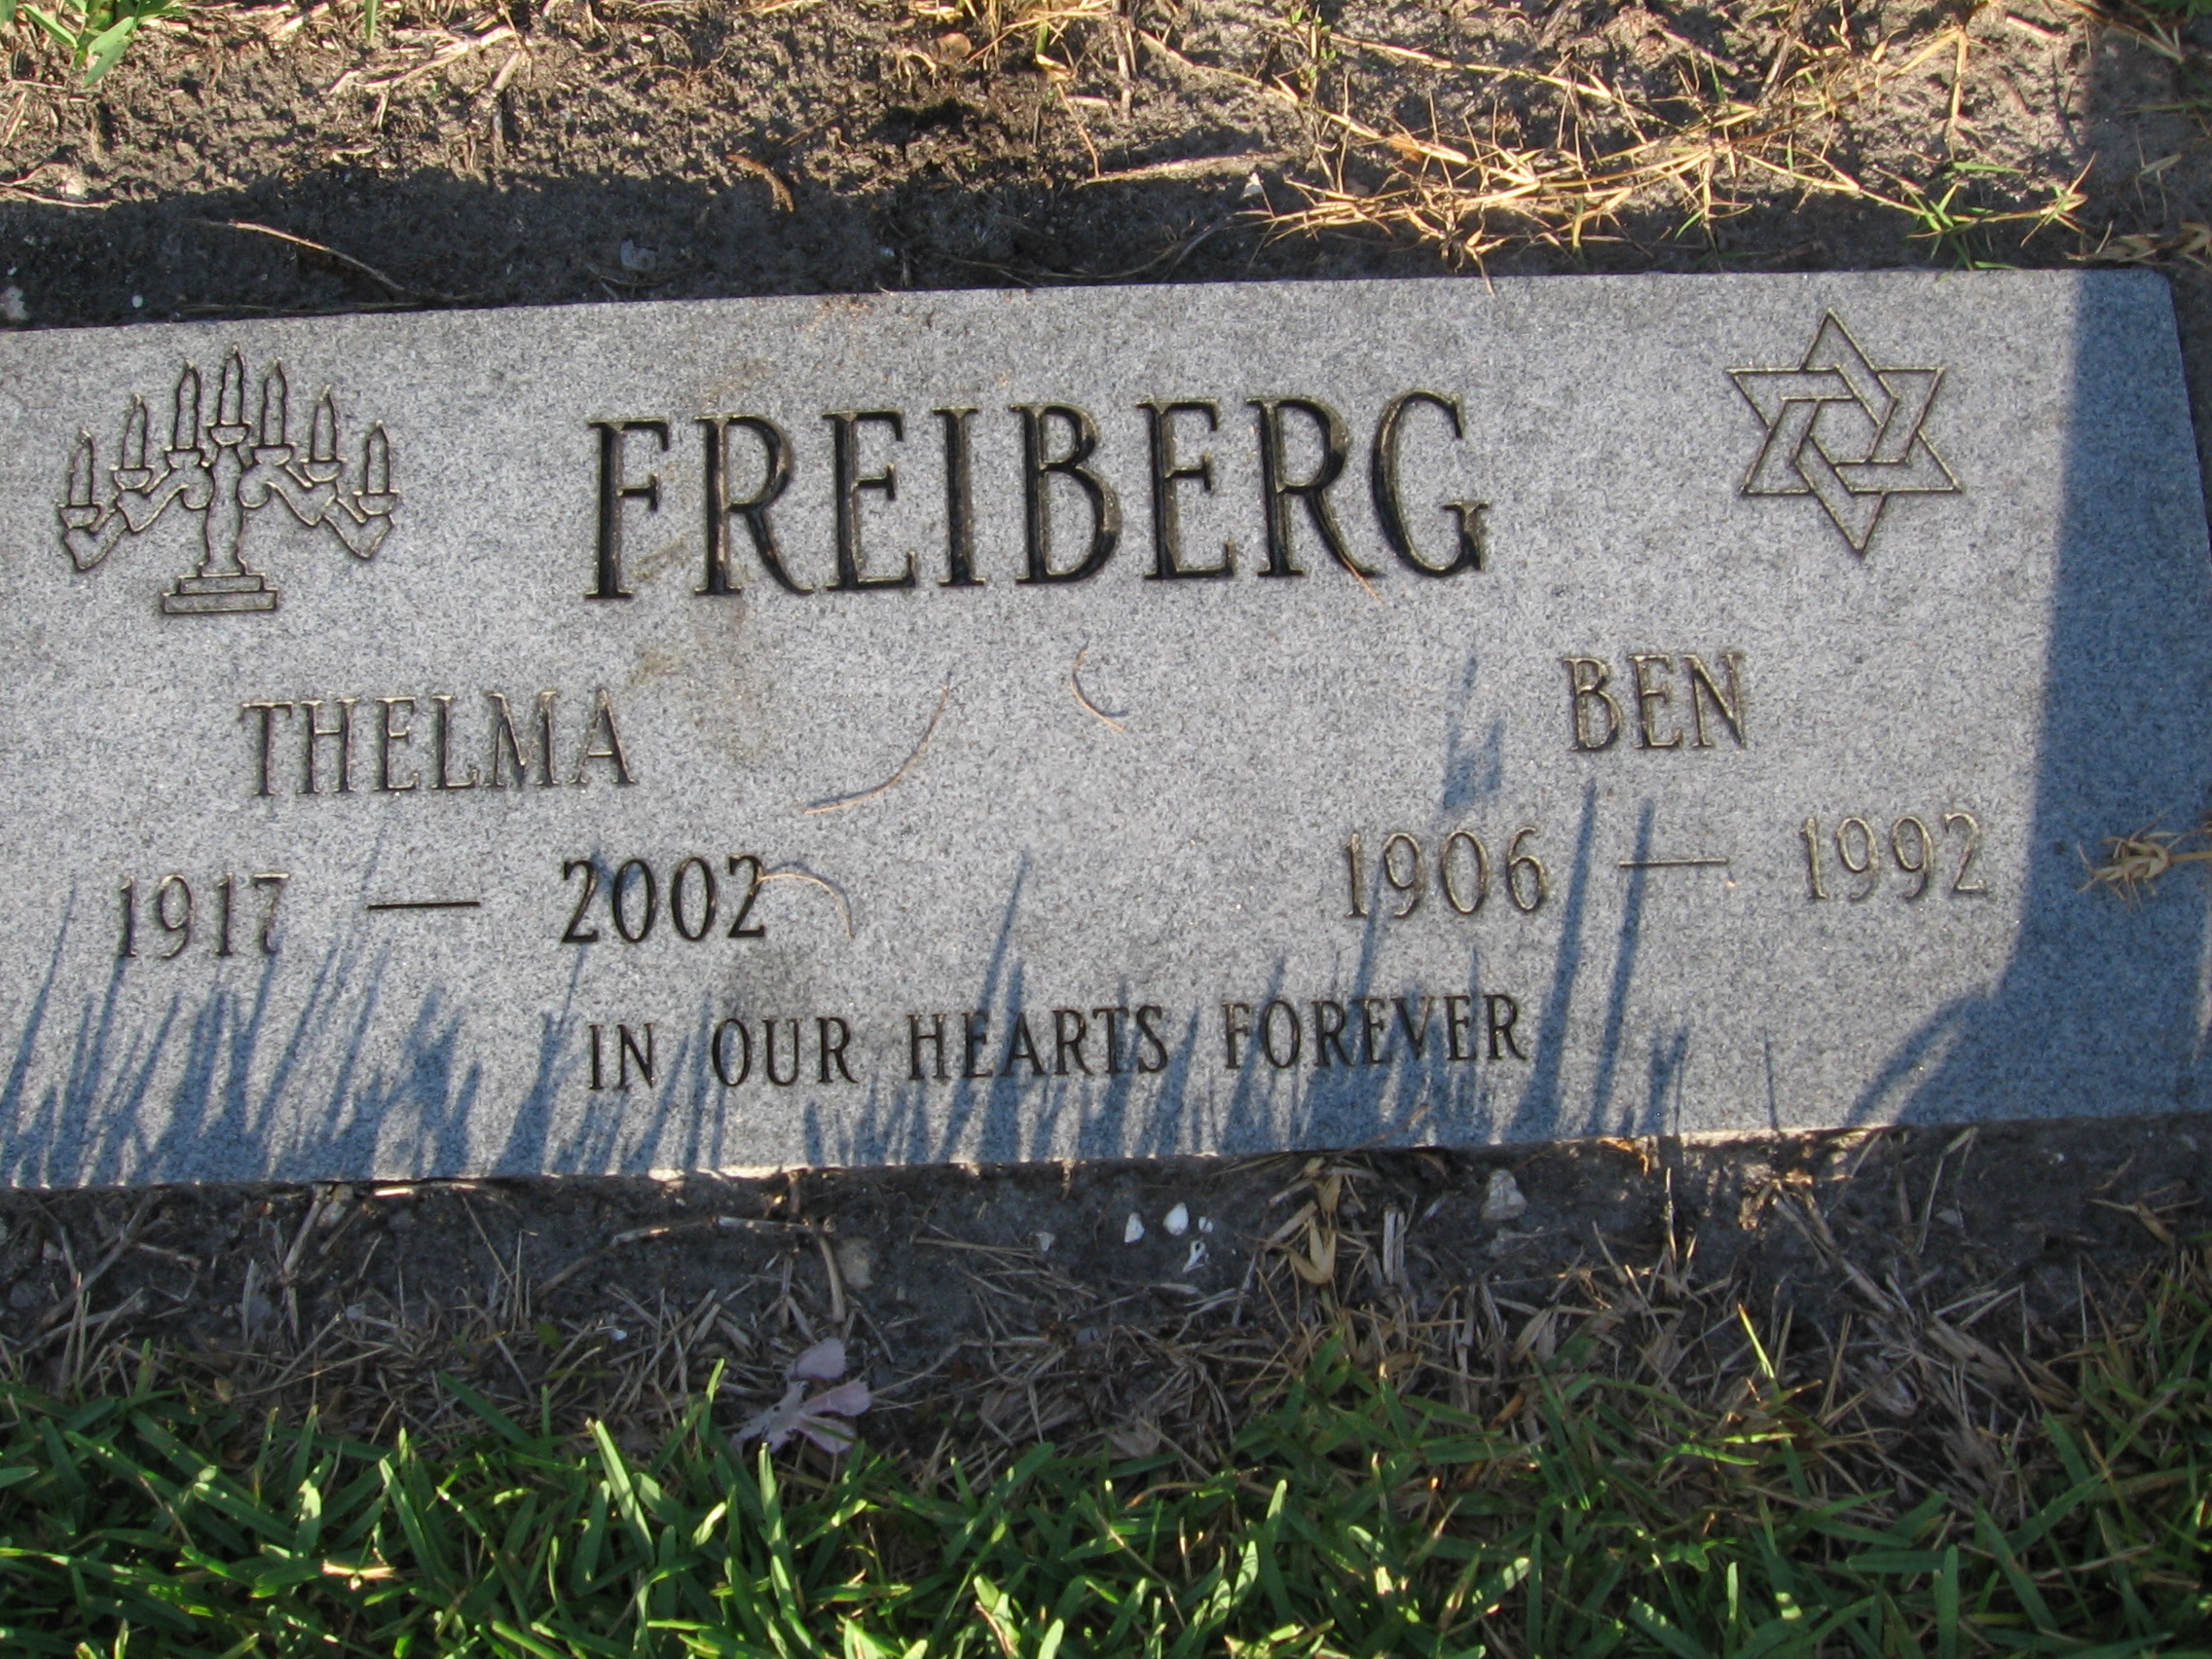 Ben Freiberg